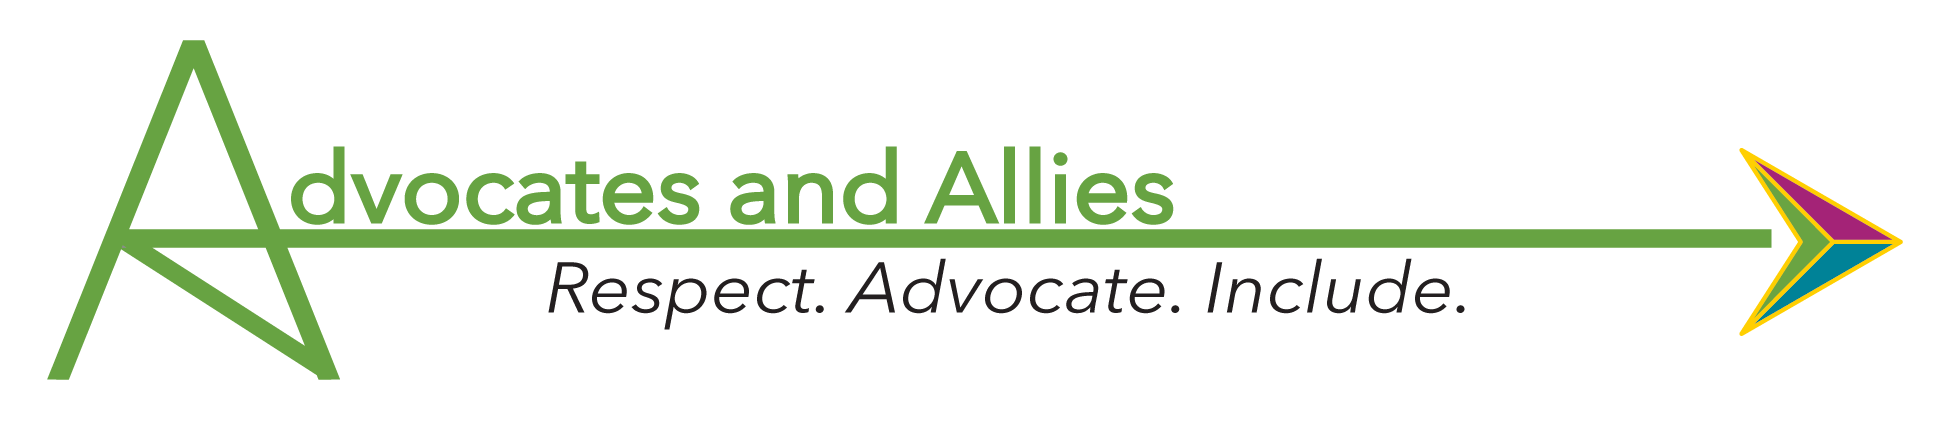 advocates and allies logo